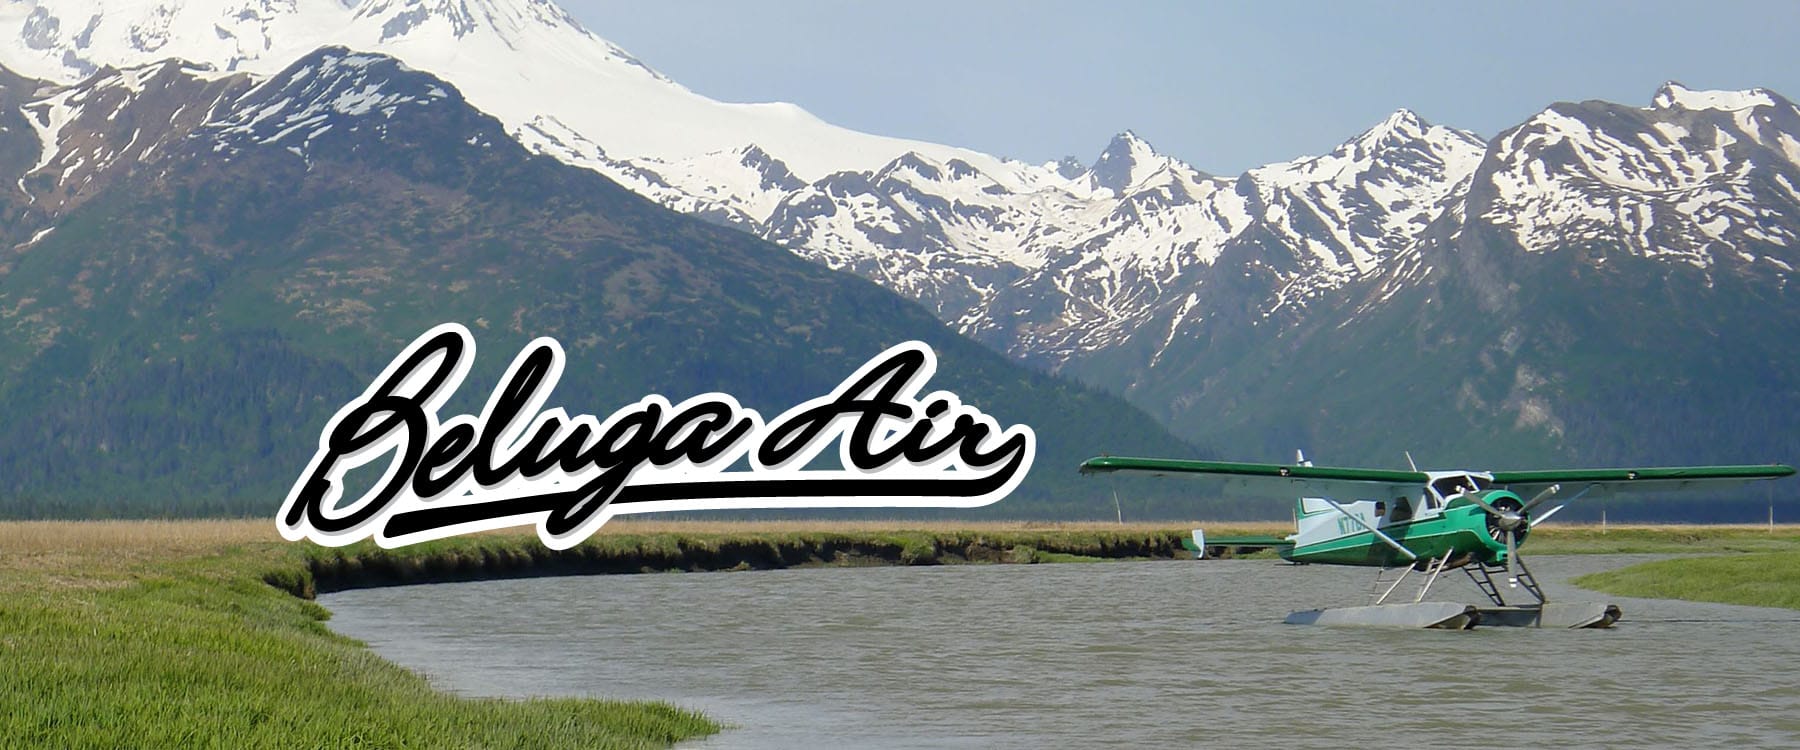 Beluga Air plane and mountains